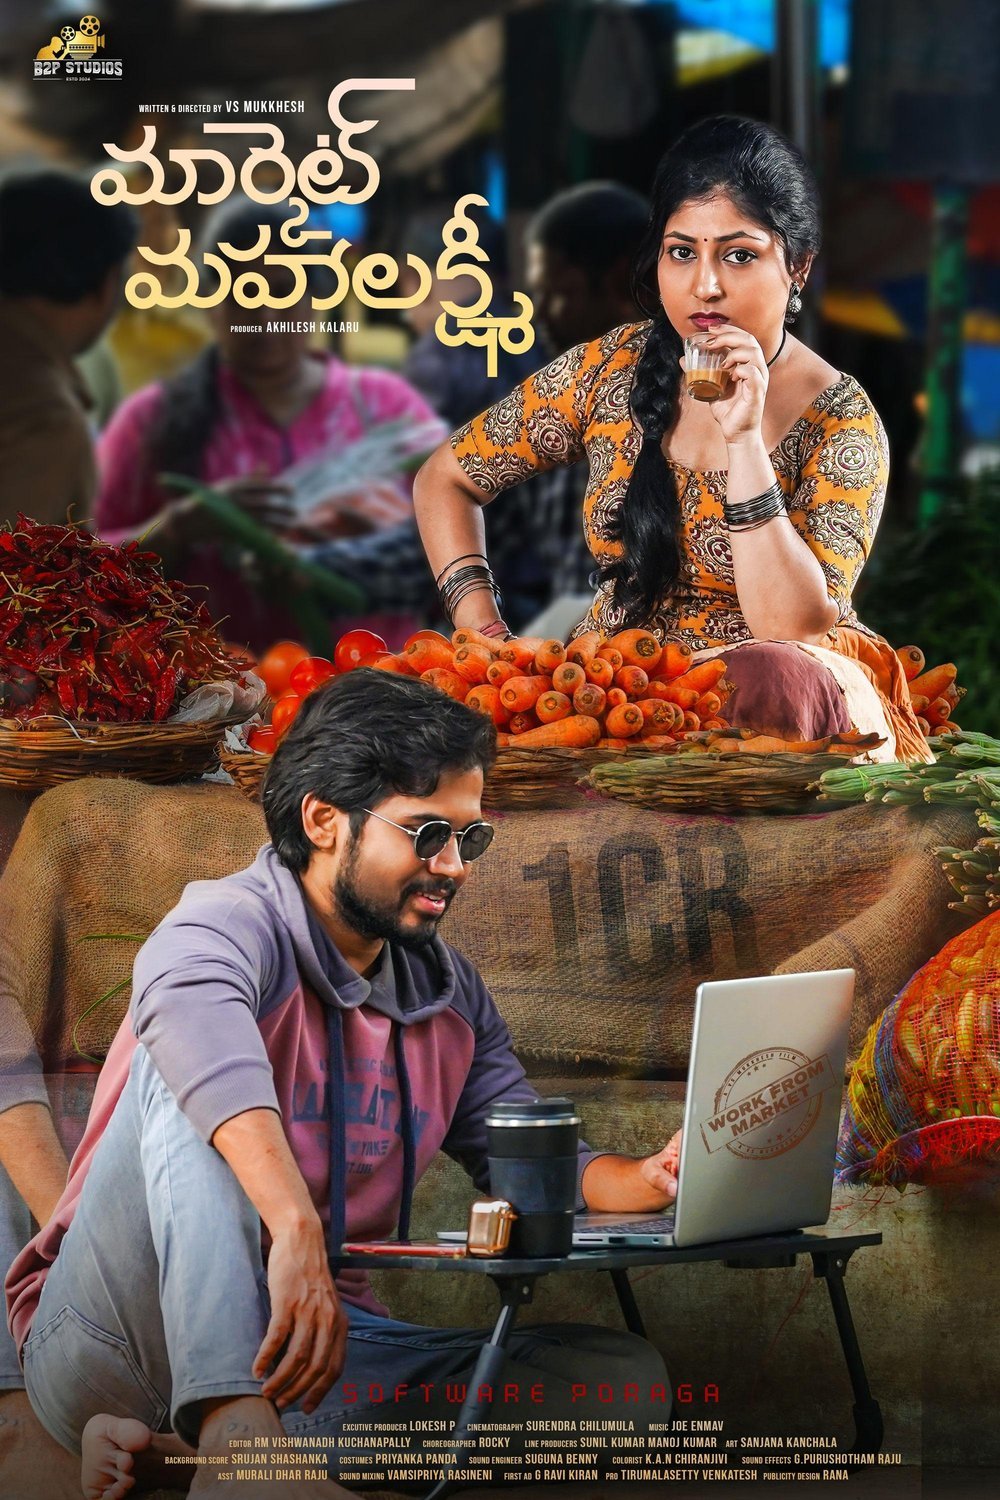 Telugu poster of the movie Market Mahalakshmi